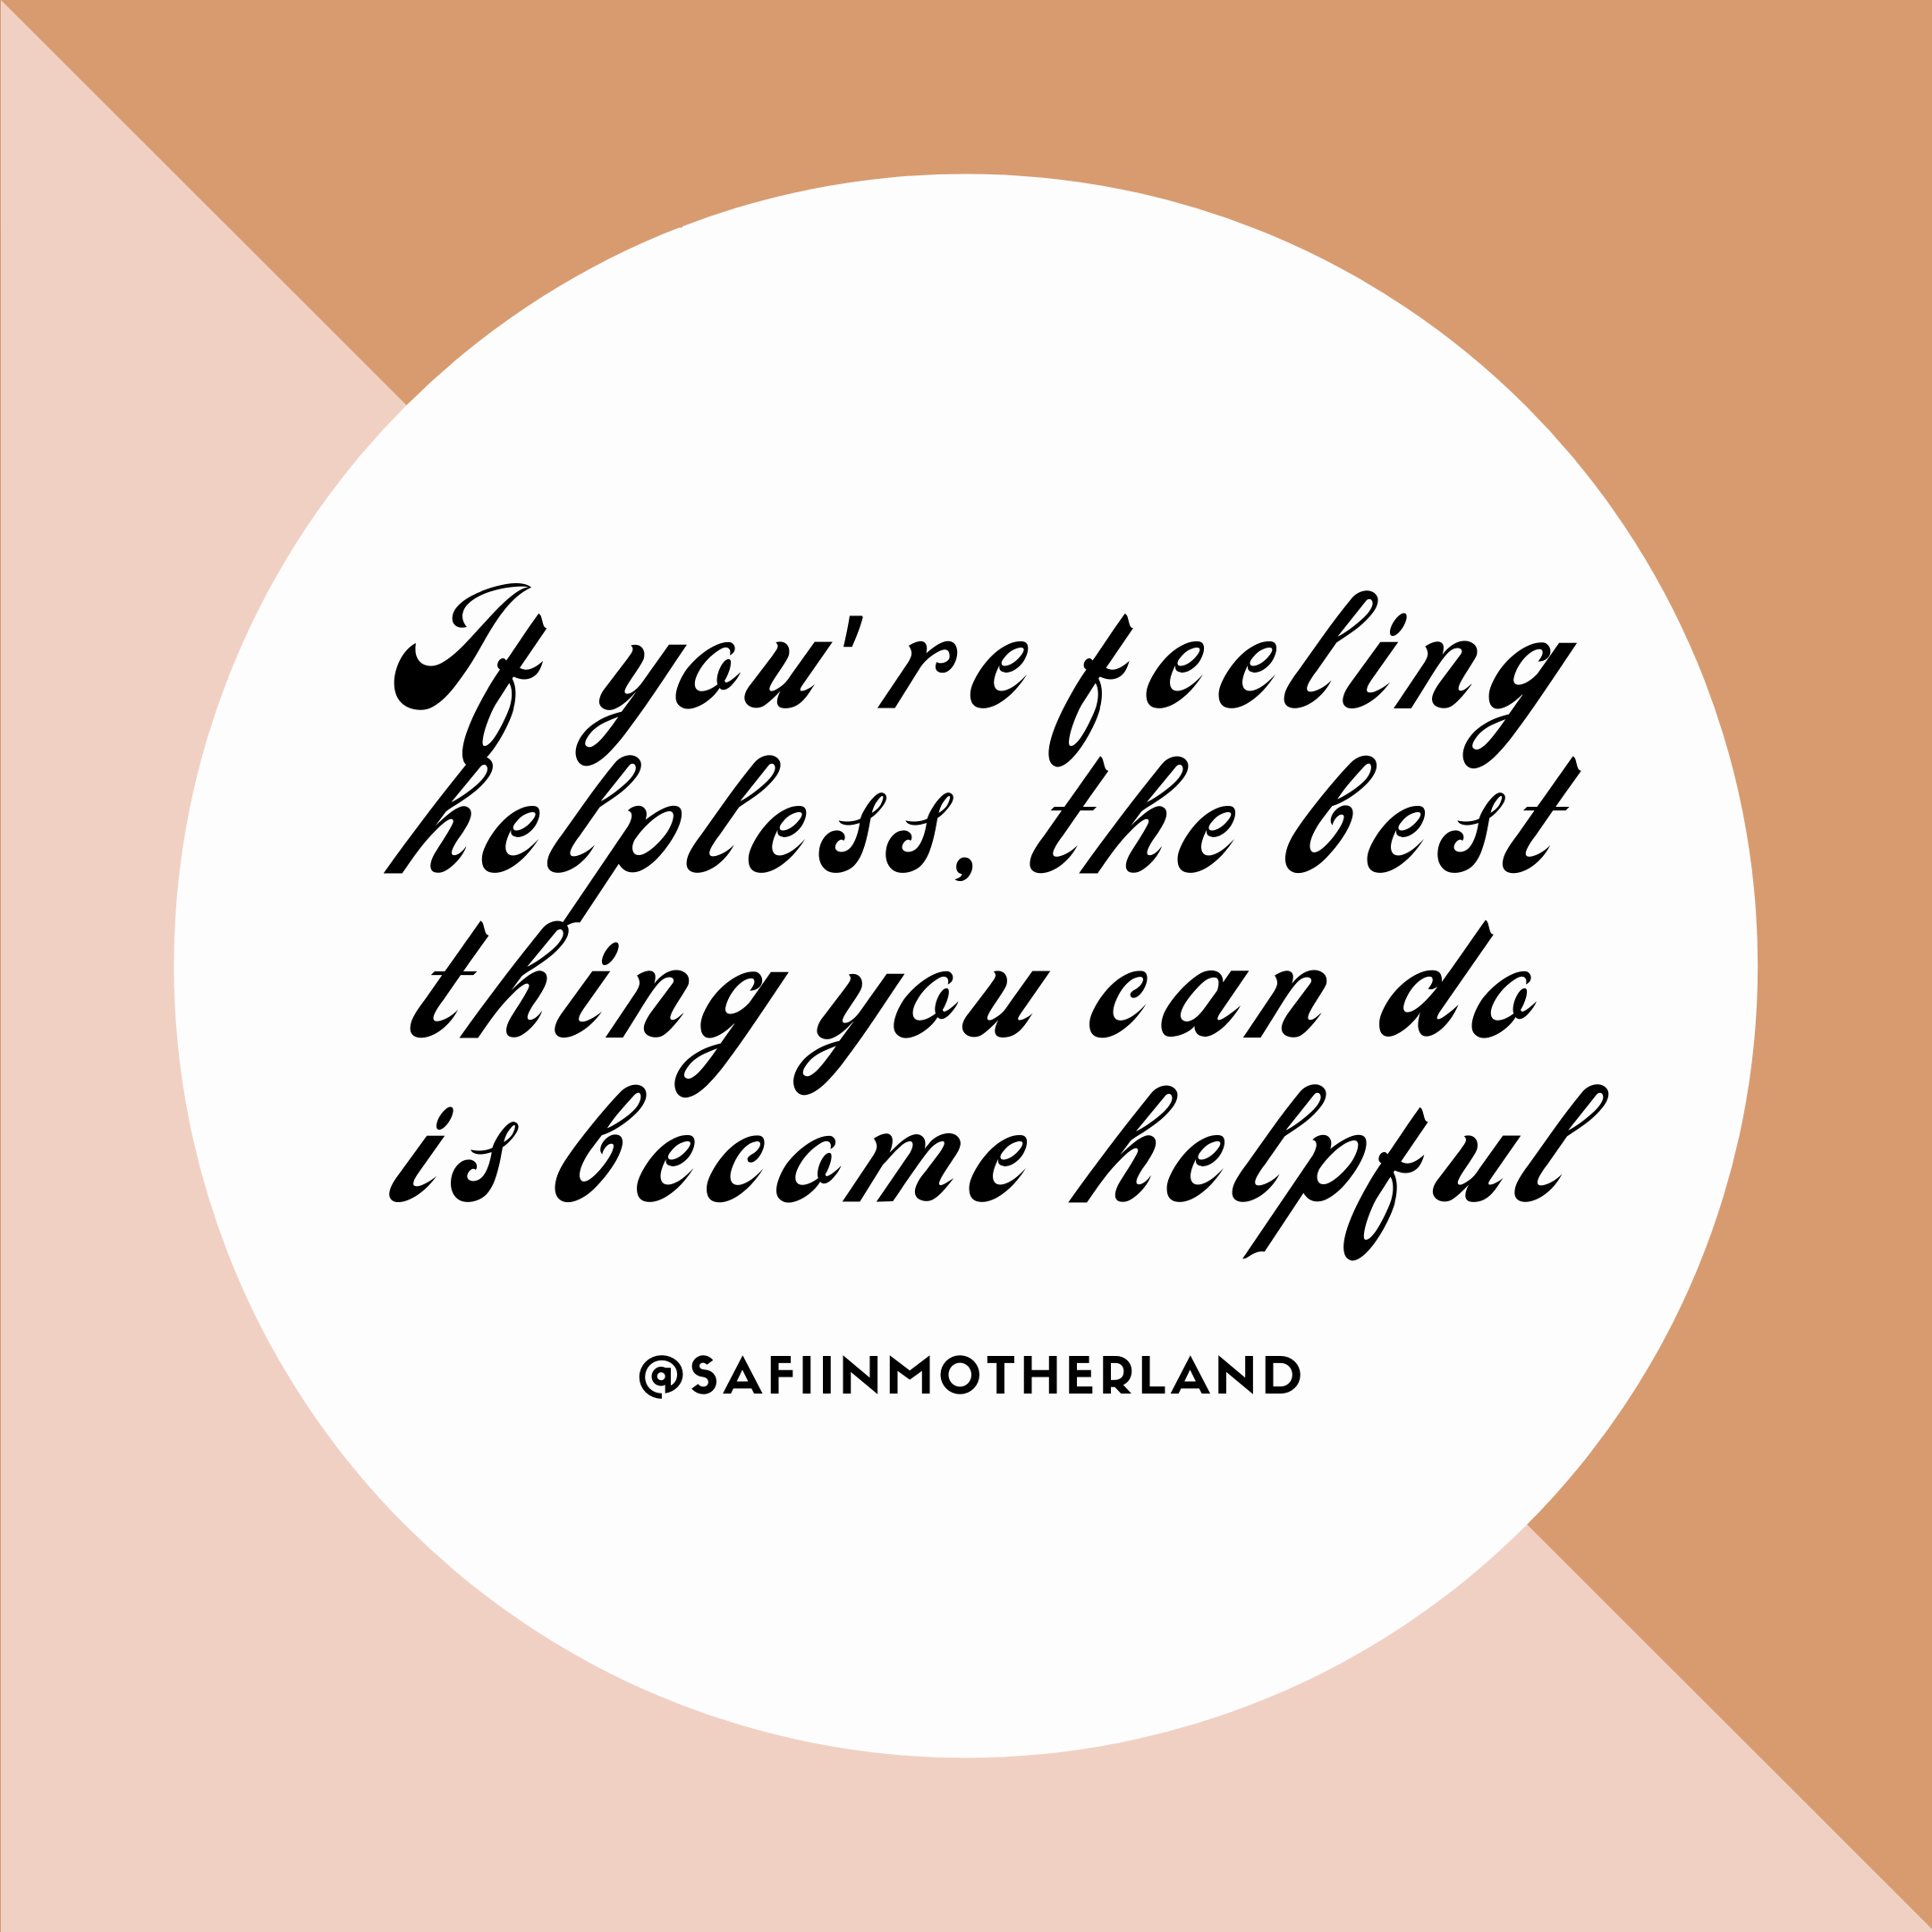 If you're feeling helpless become helpful